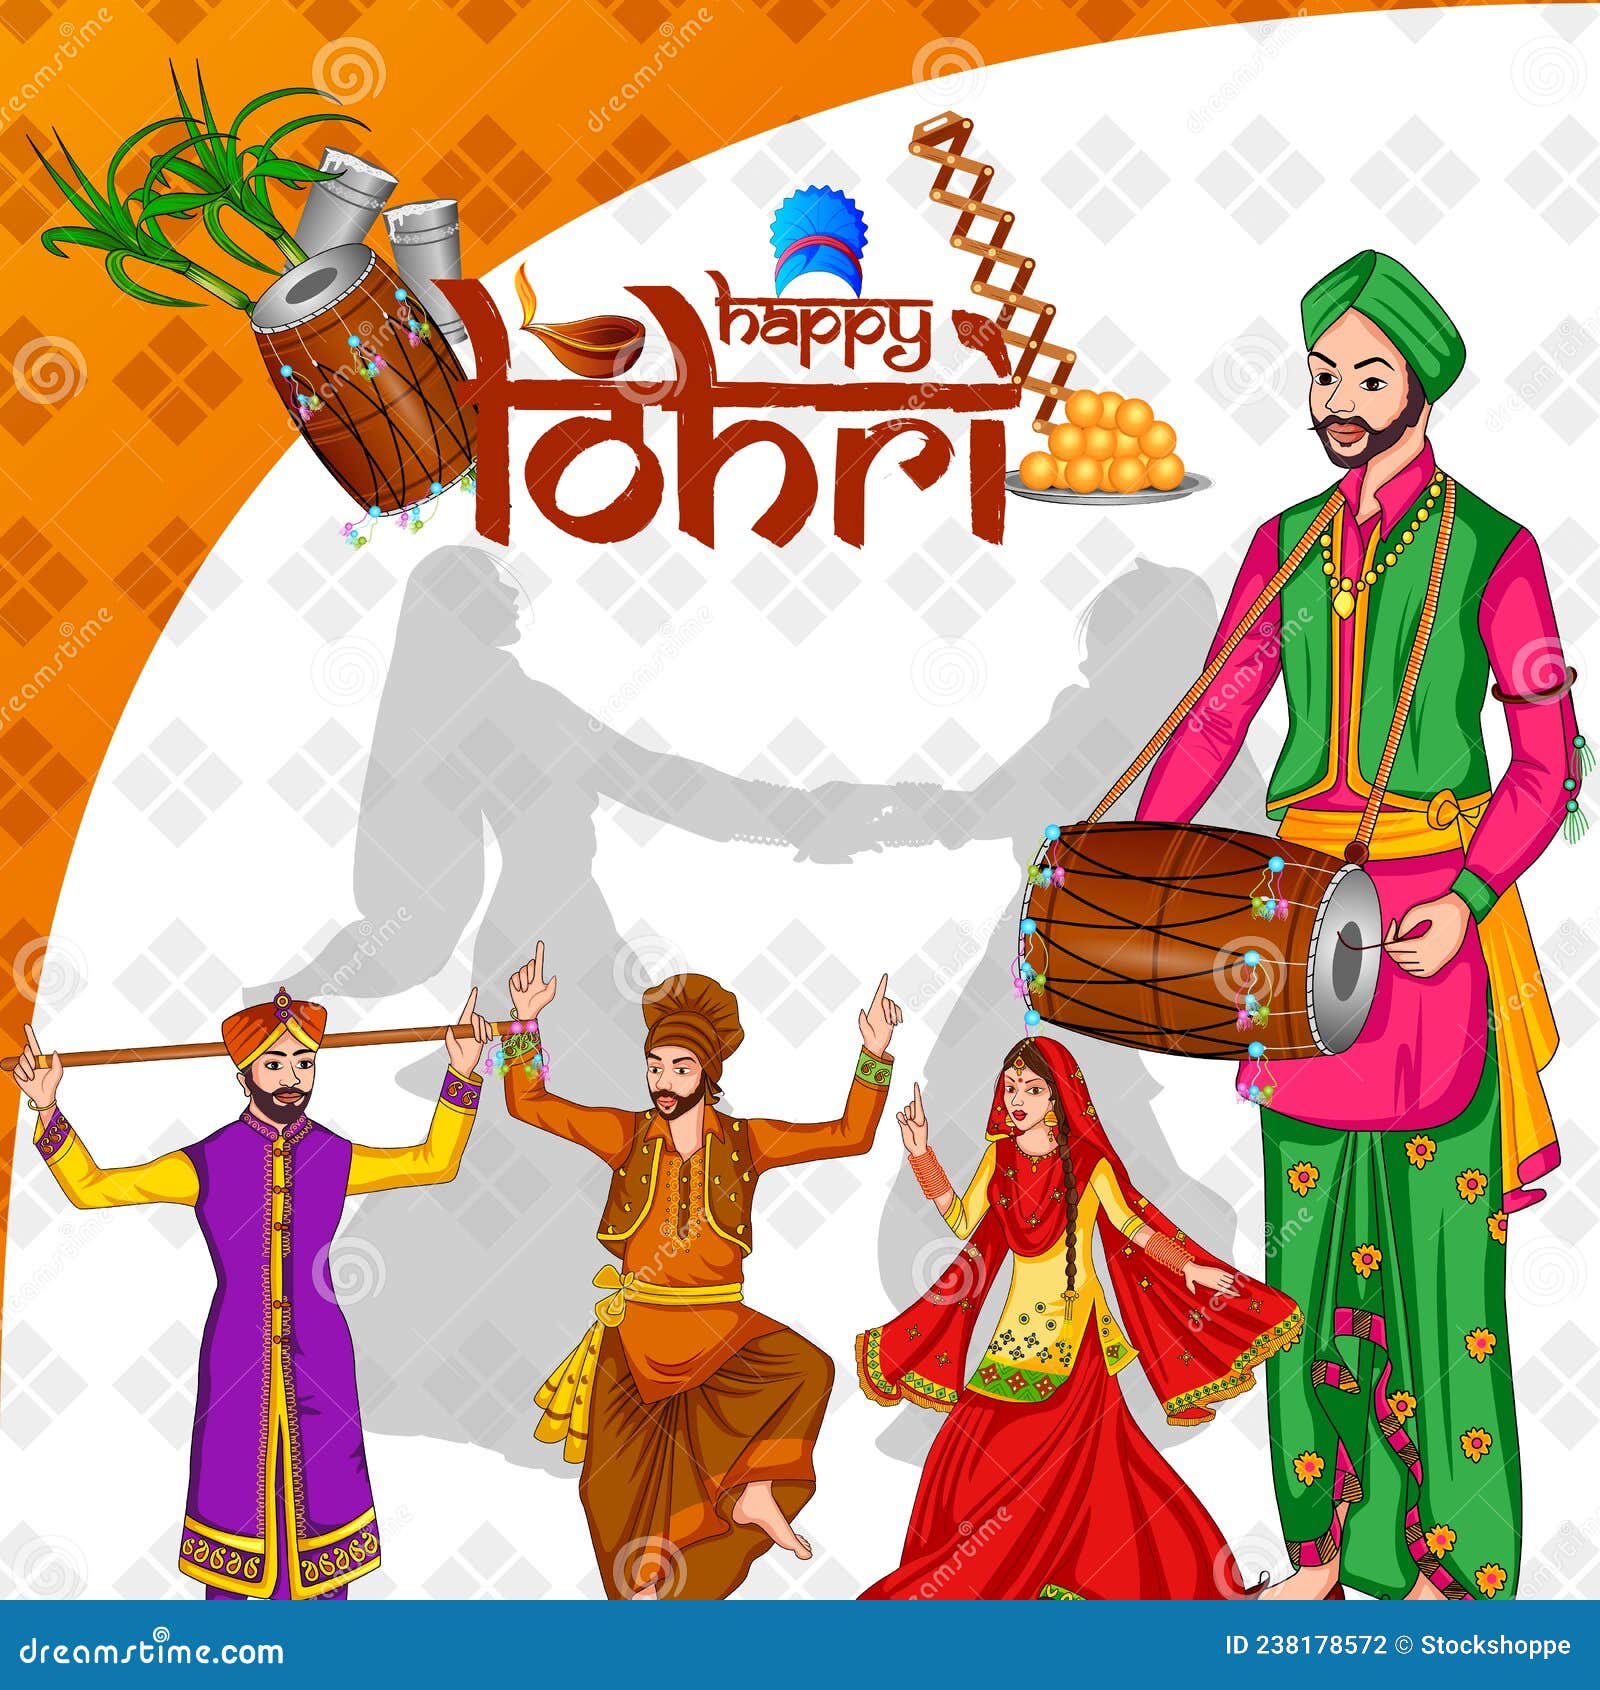 Happy Lohri Holiday Festival of Punjab India Stock Vector ...